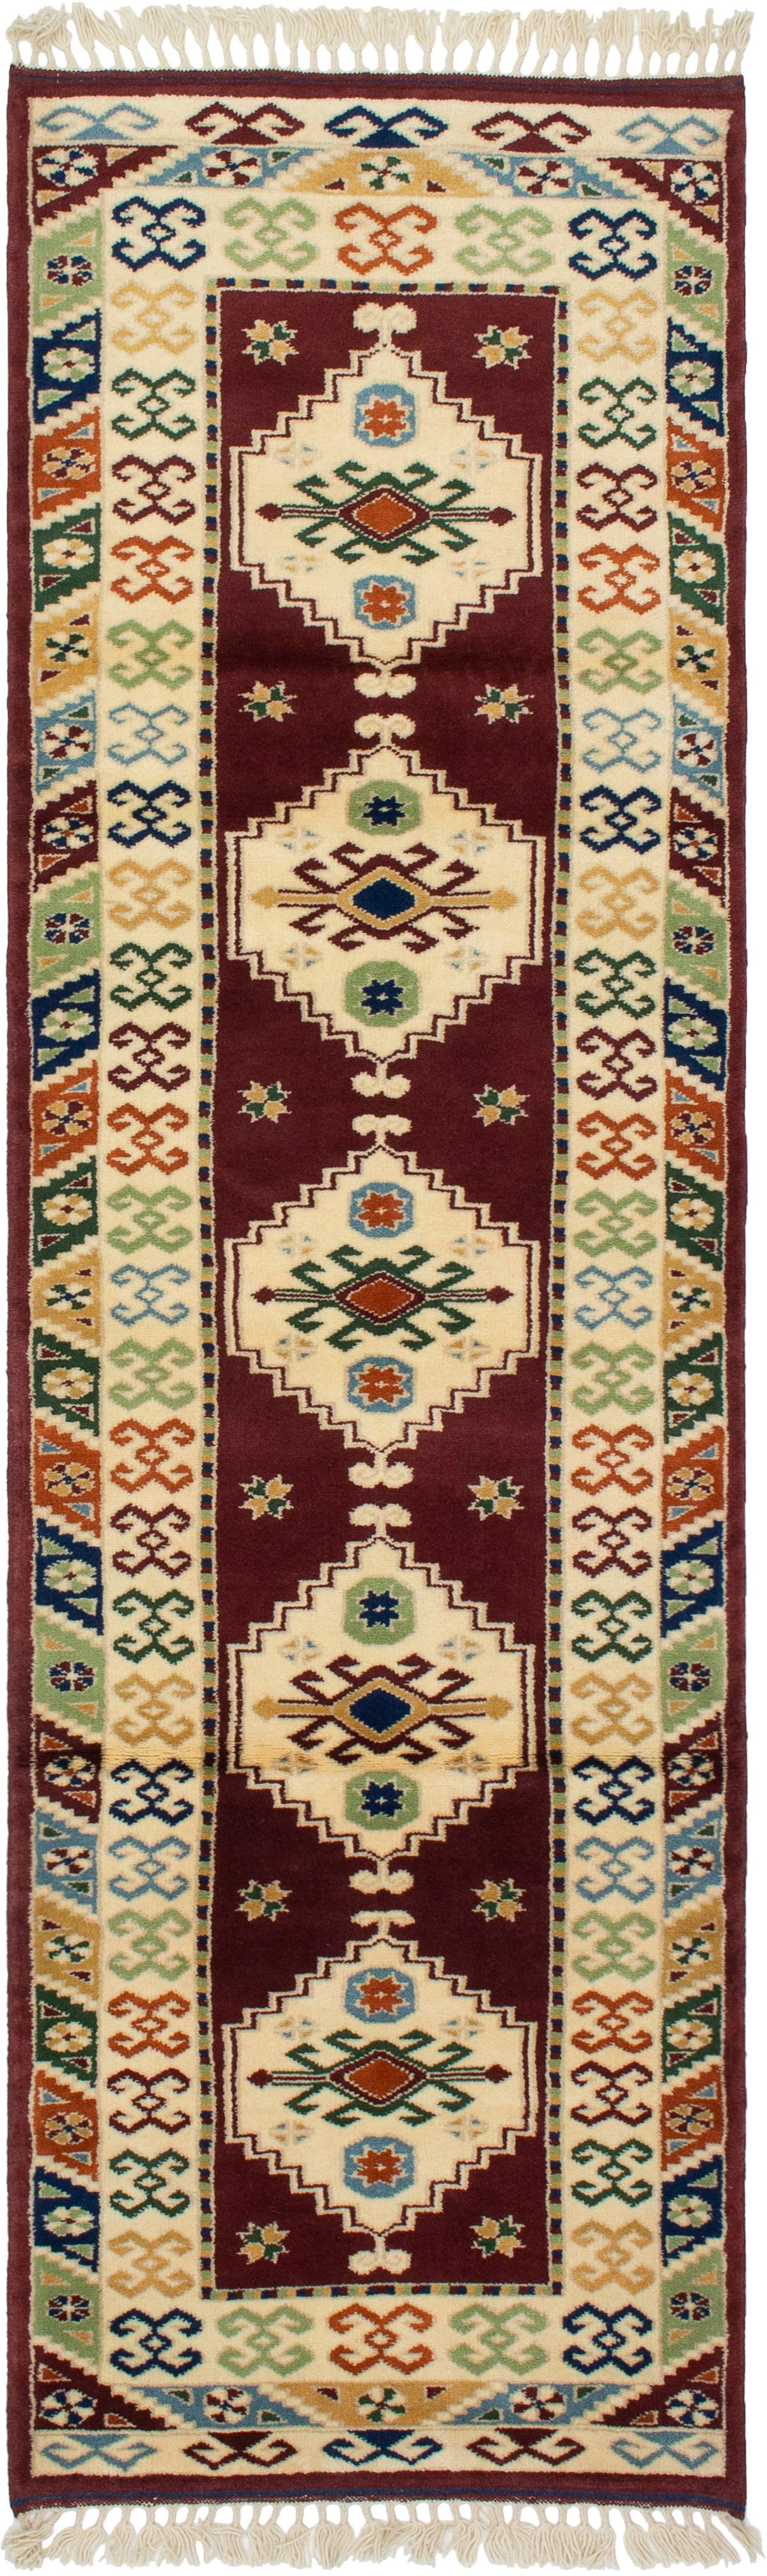 Hand-knotted Antique Shiravan Dark Red Wool Rug 2'7" x 8'10" Size: 2'7" x 8'10"  